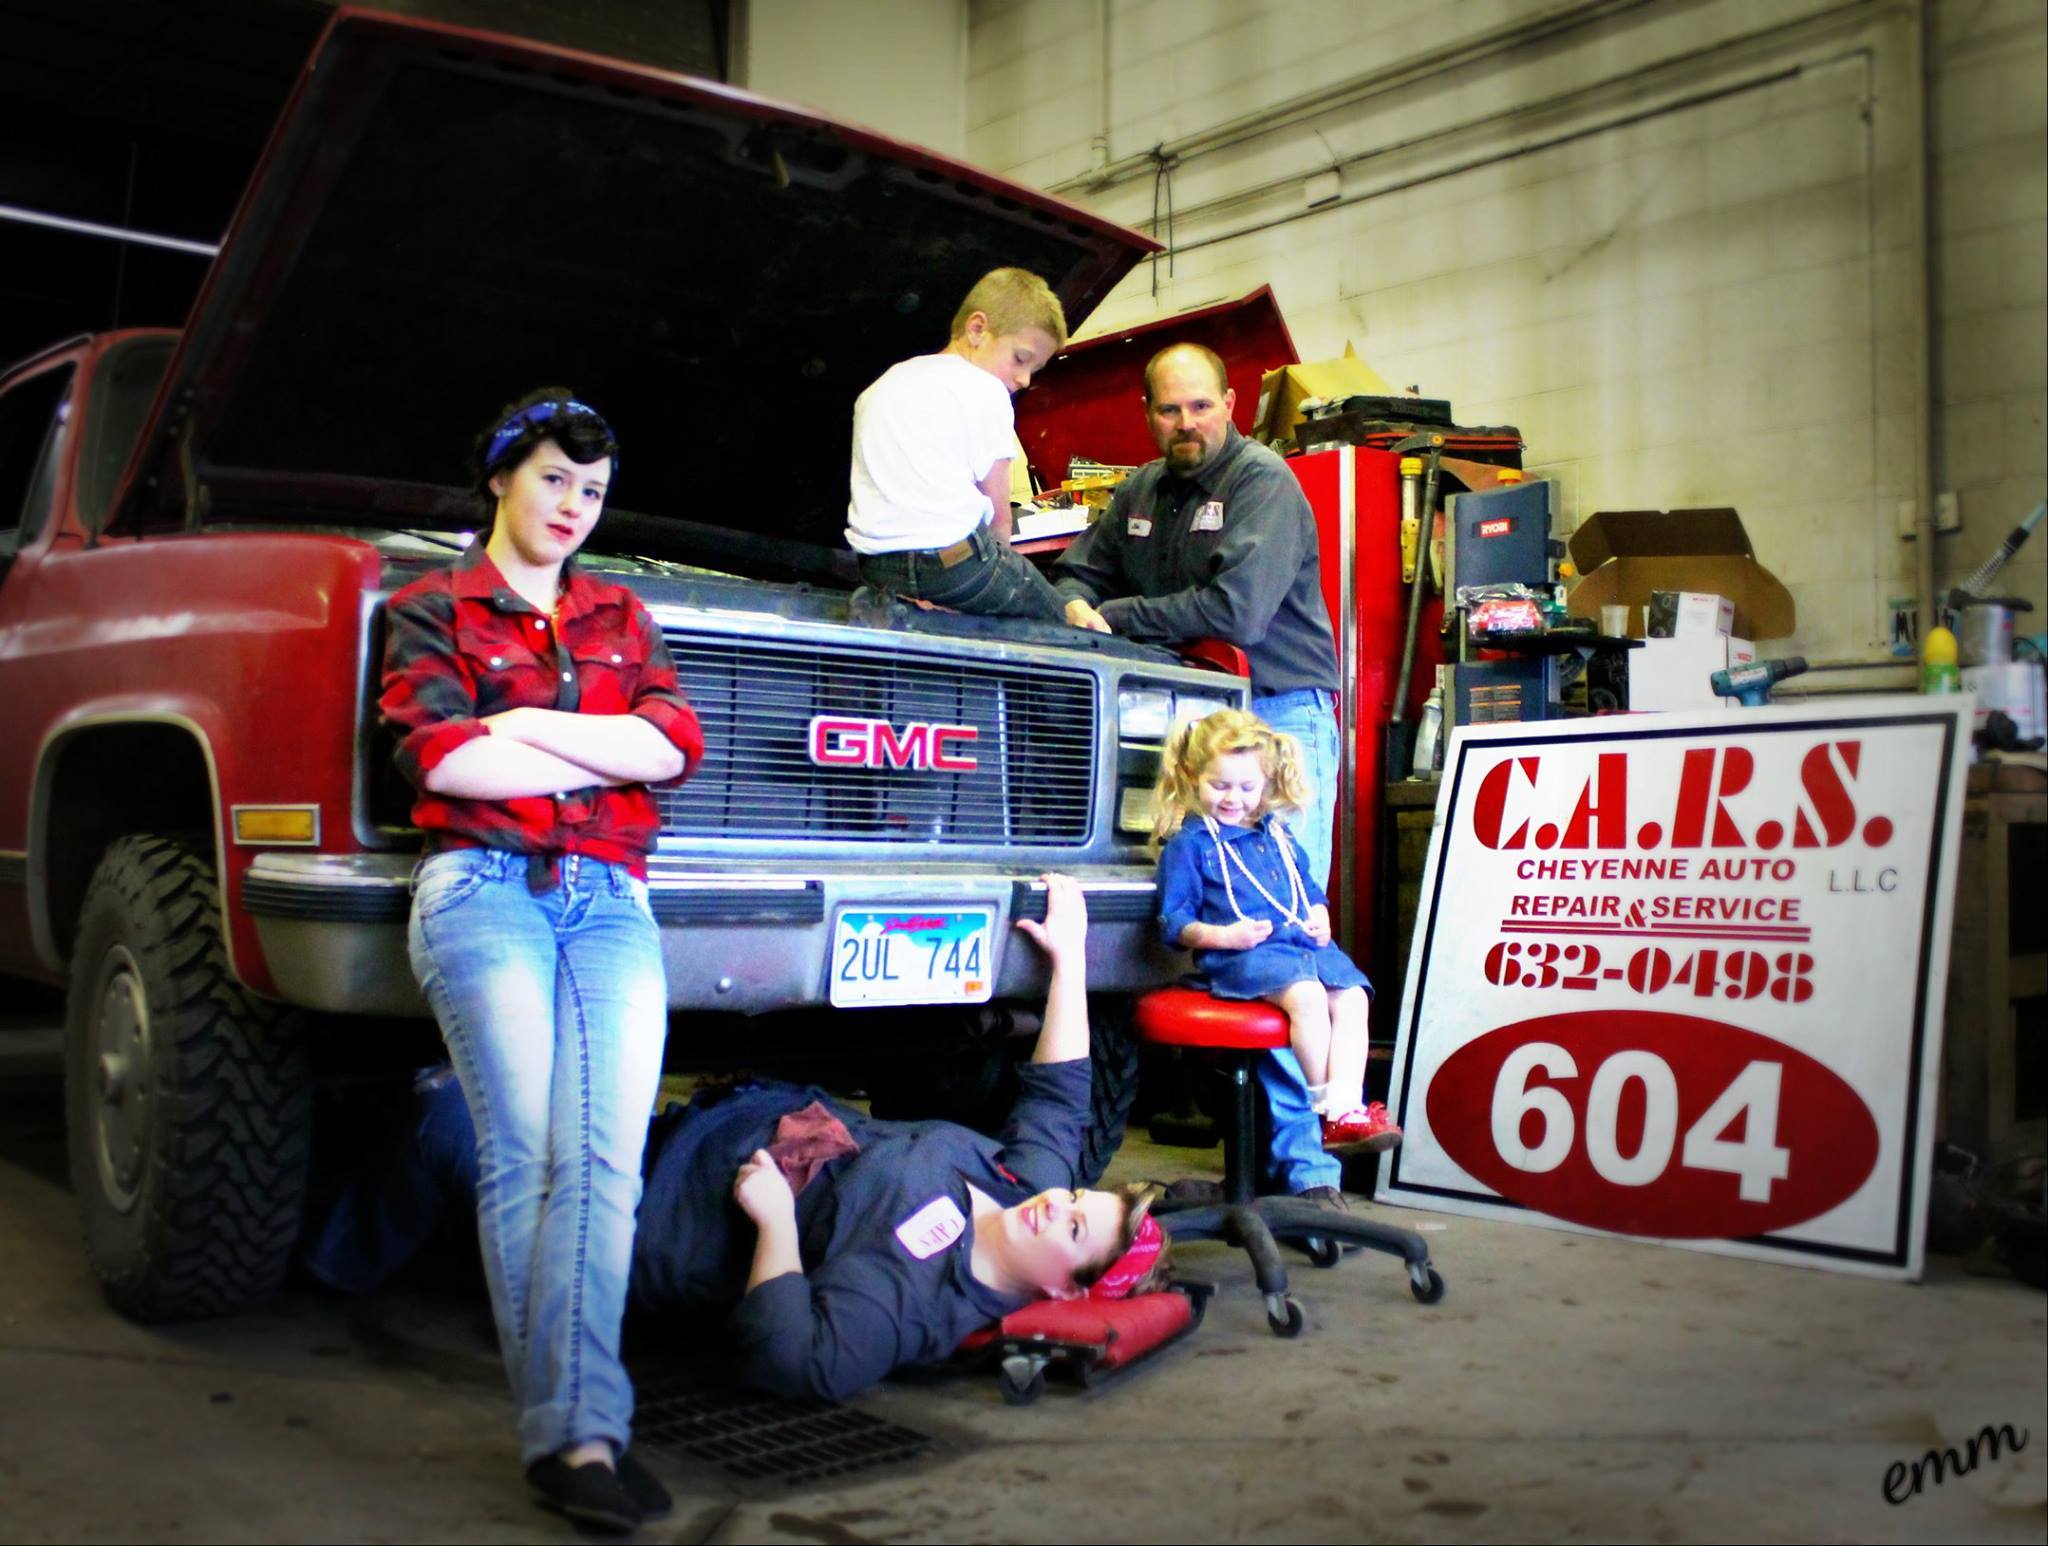 Cheyenne Auto Repair & Services